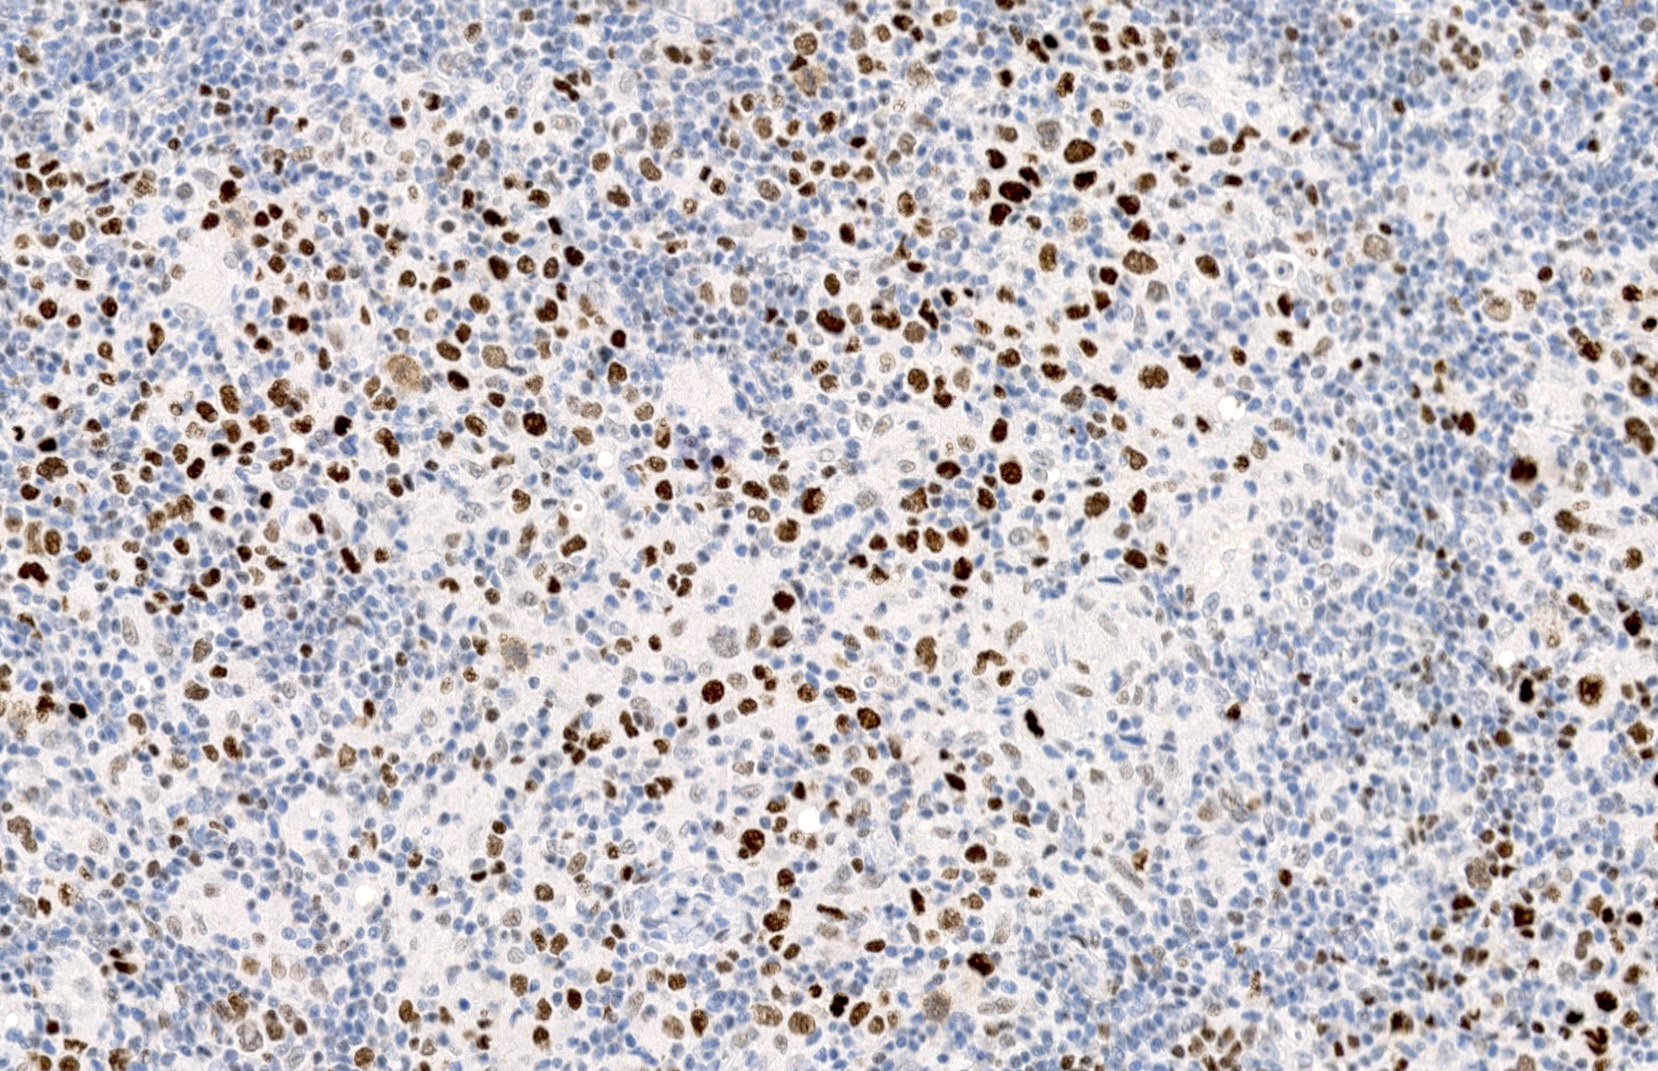 Nodular lymphocyte predominant Hodgkin lymphoma (H&E and BCL6)